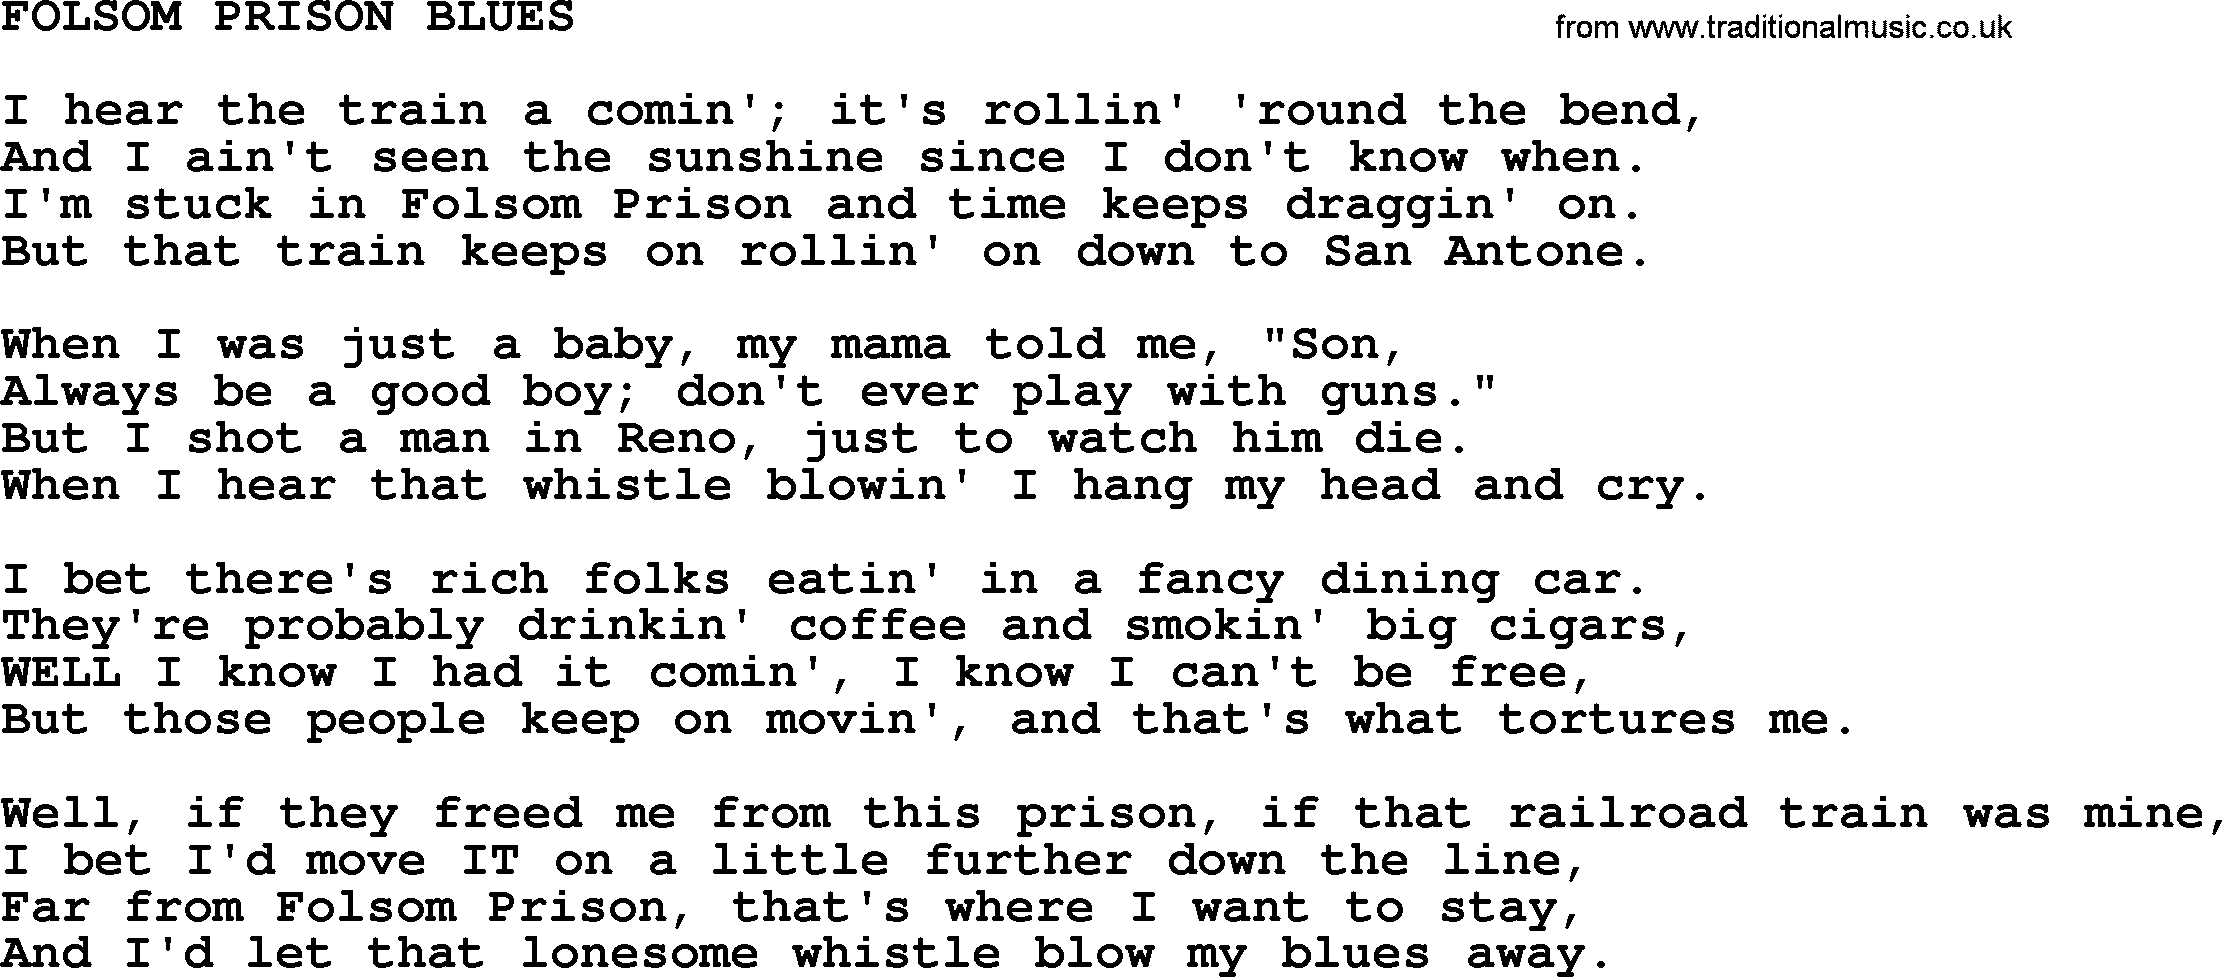 Johnny Cash song Folsom Prison Blues.txt lyrics